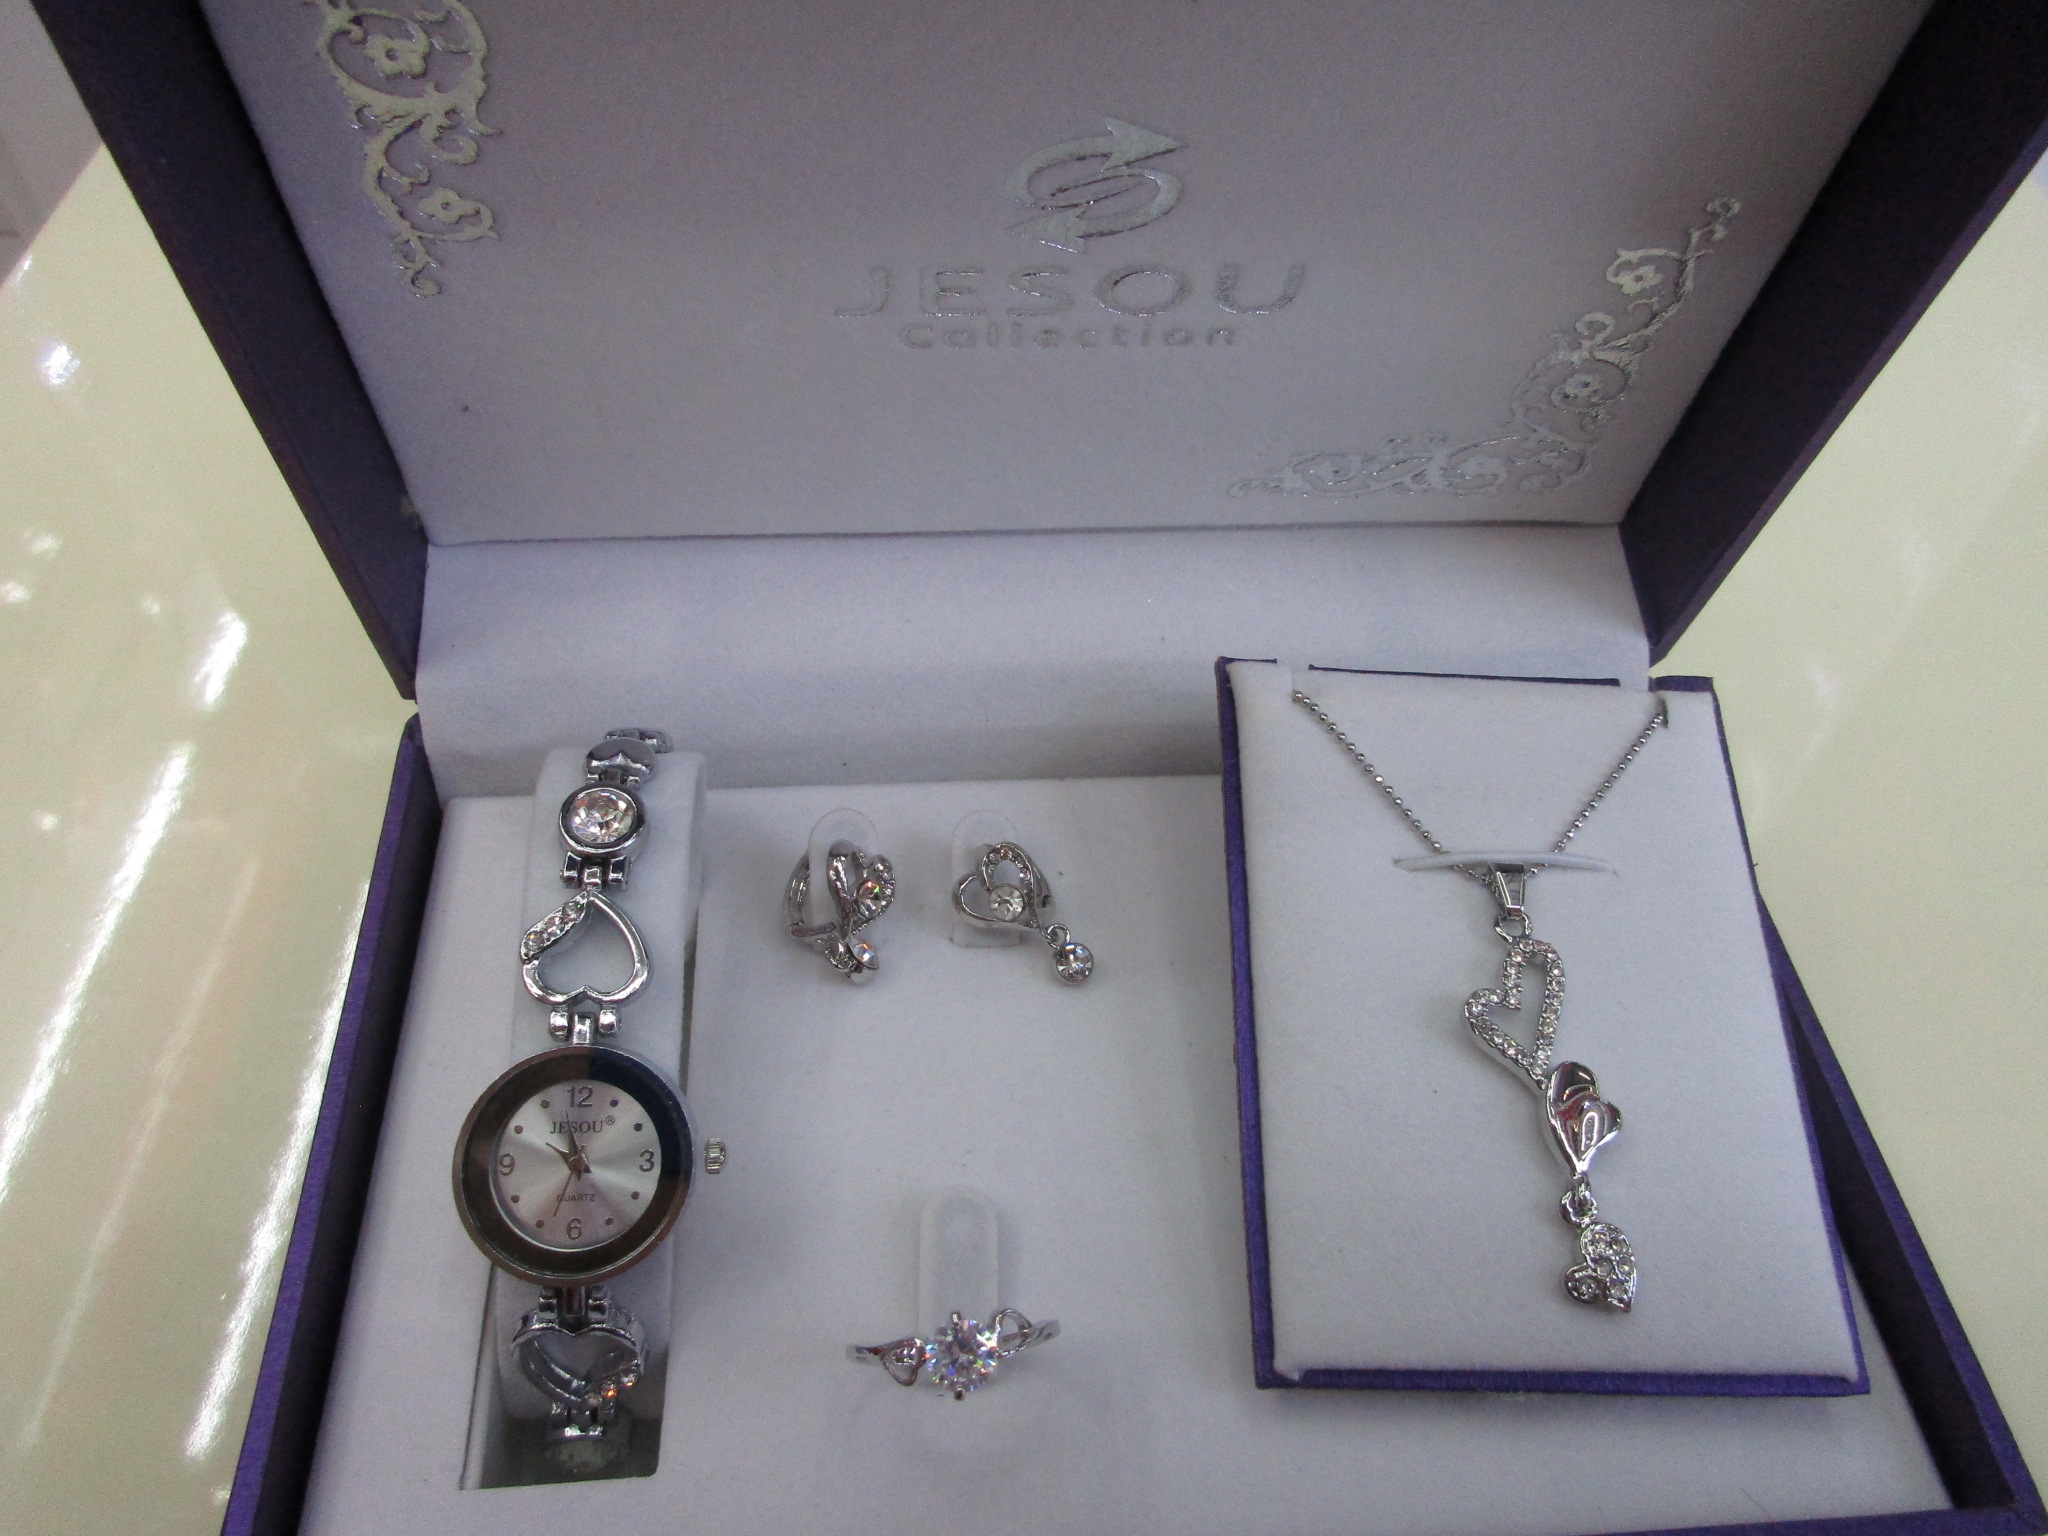 upscale lady necklace watch gift box